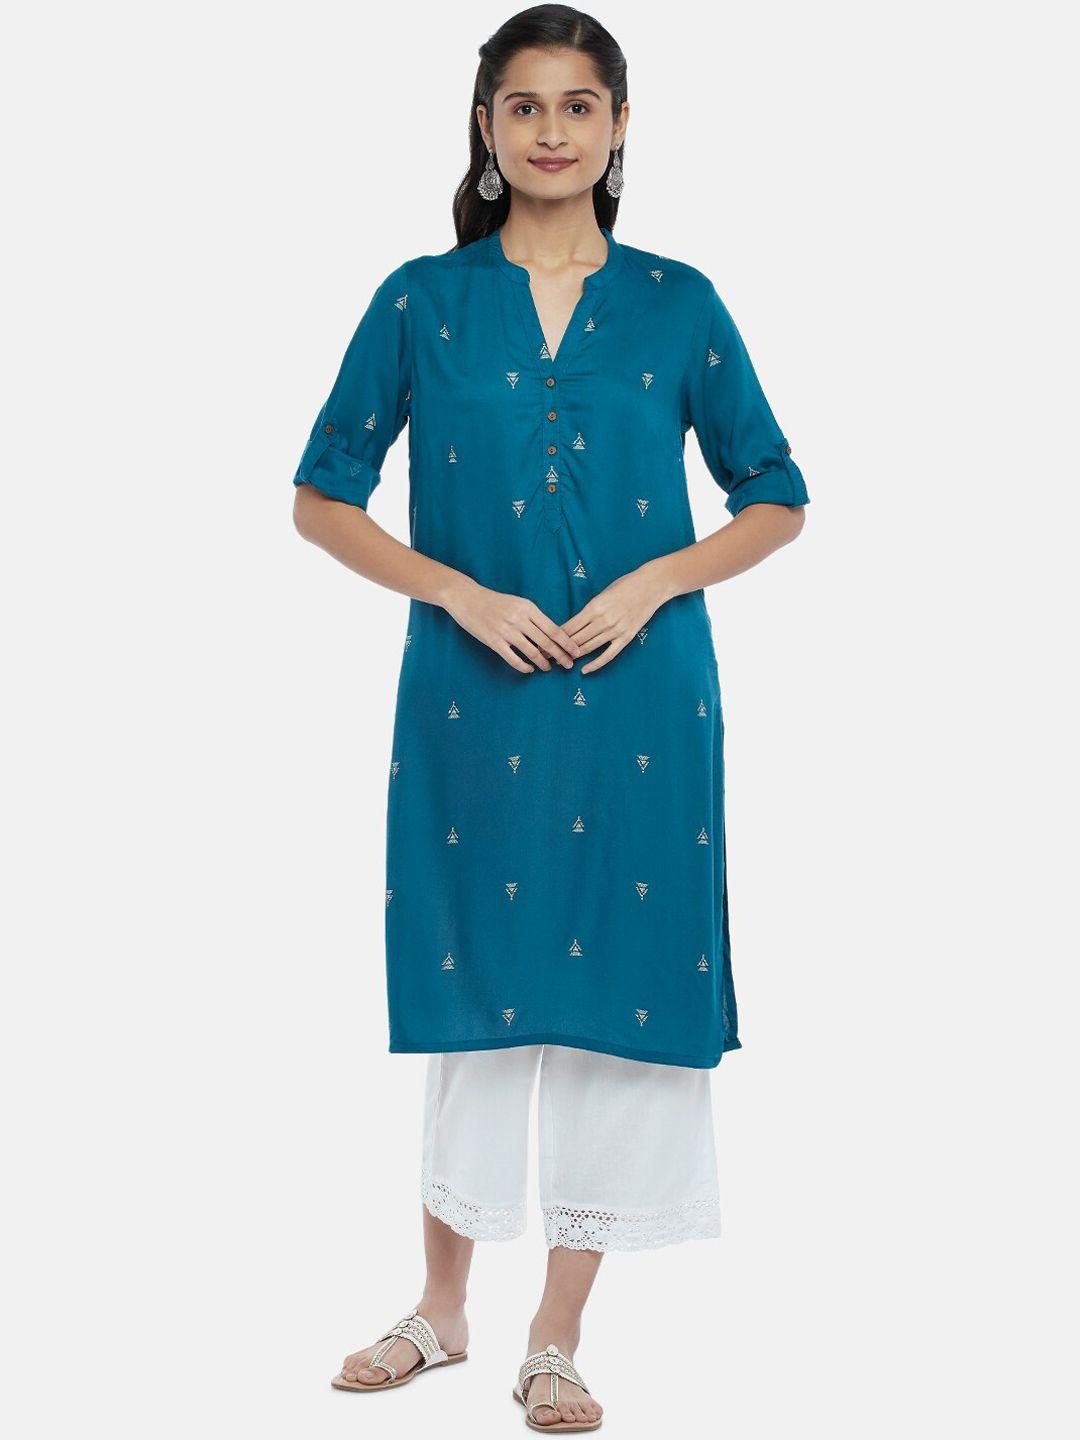 rangmanch by pantaloons women teal geometric printed straight kurta